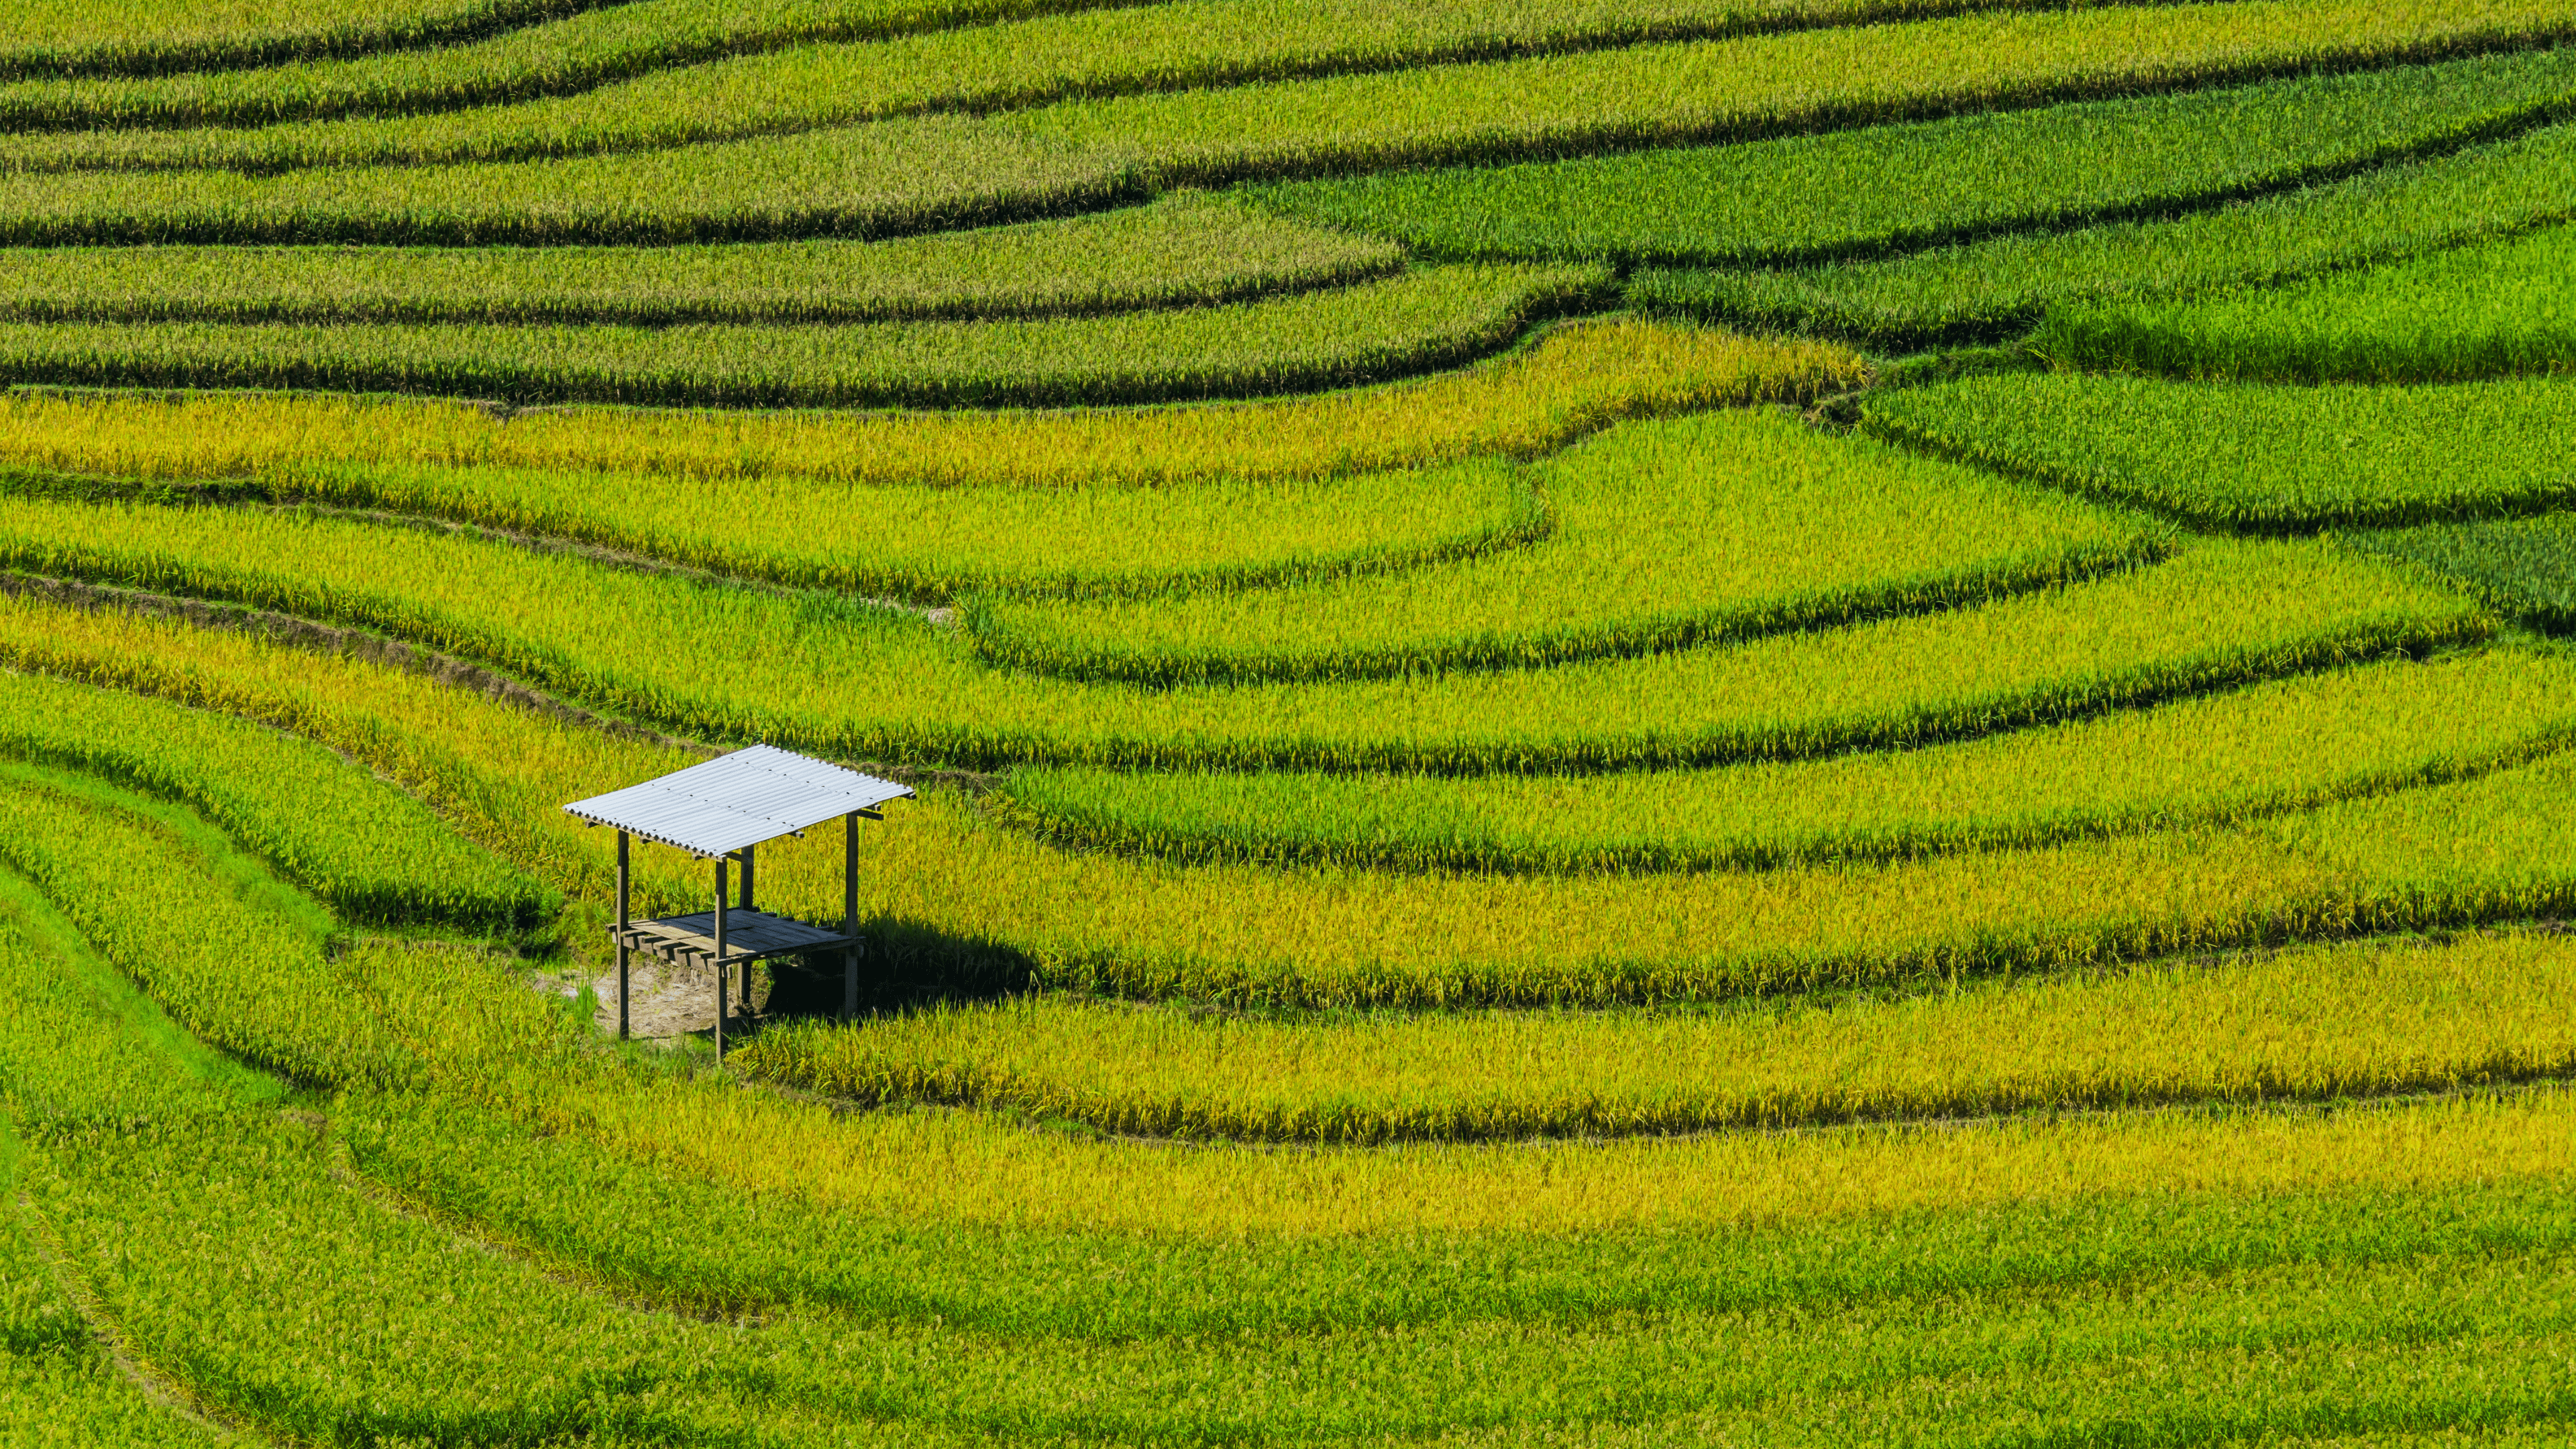 Rice Patty Fields in Vietnam